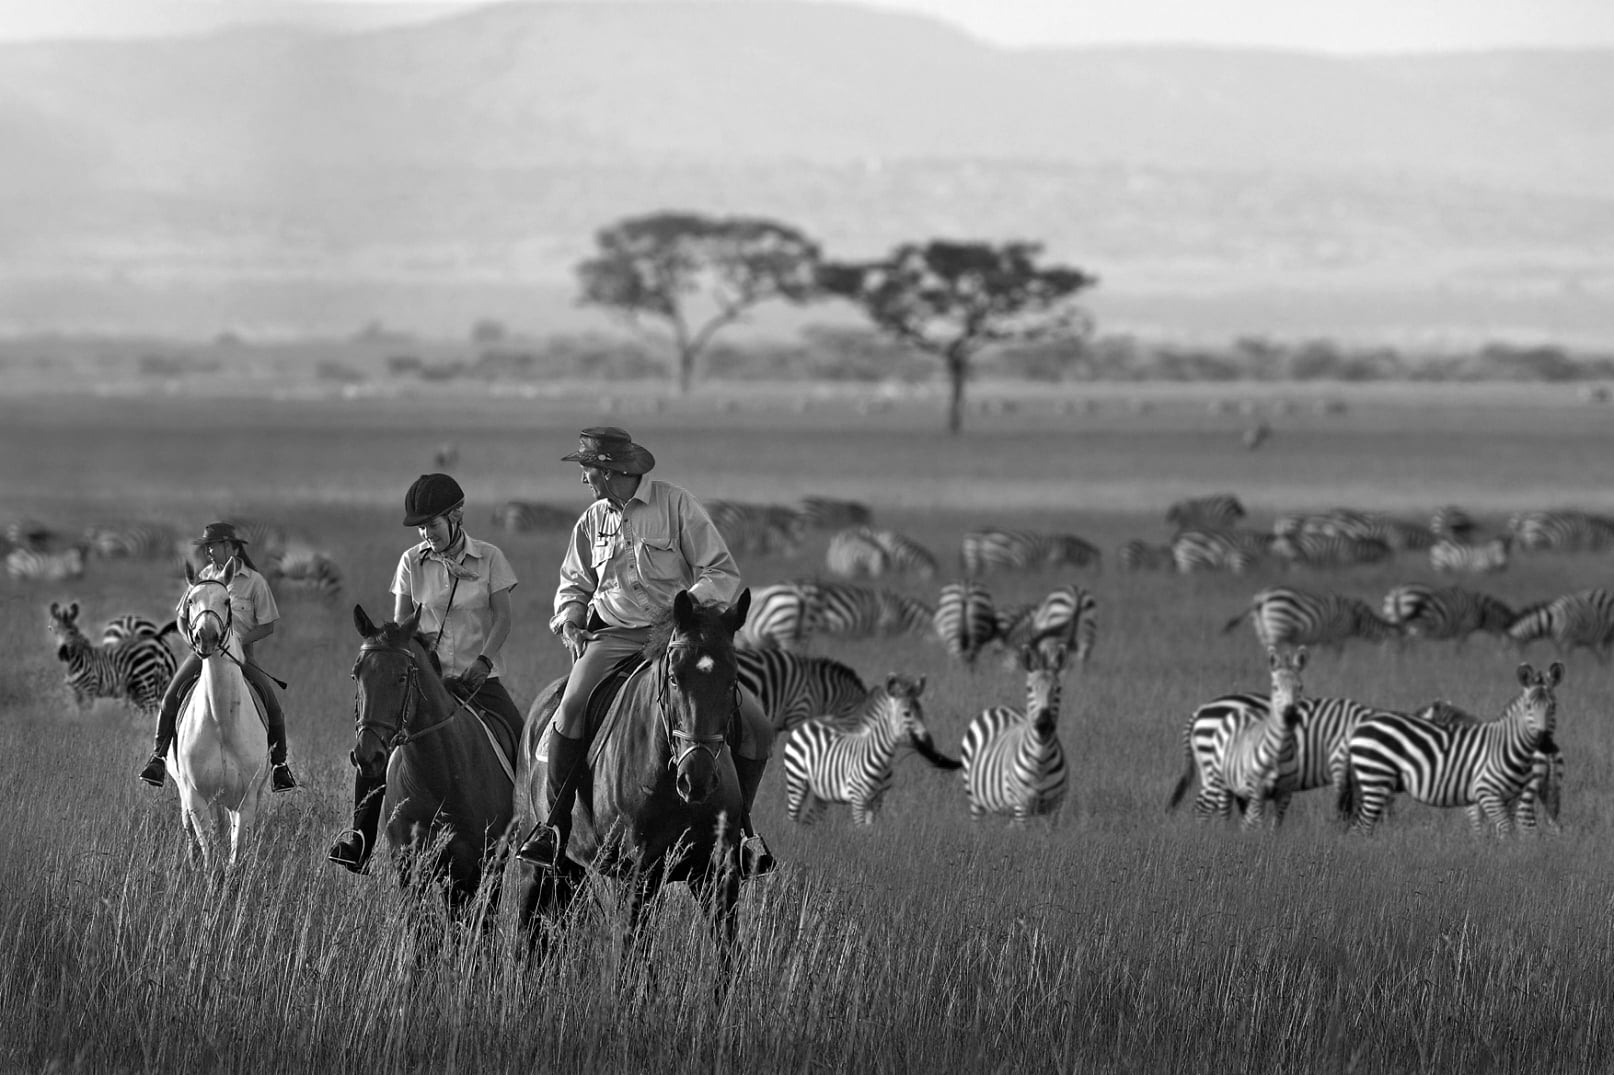 Horse riders passing through a herd of grazing Zebras